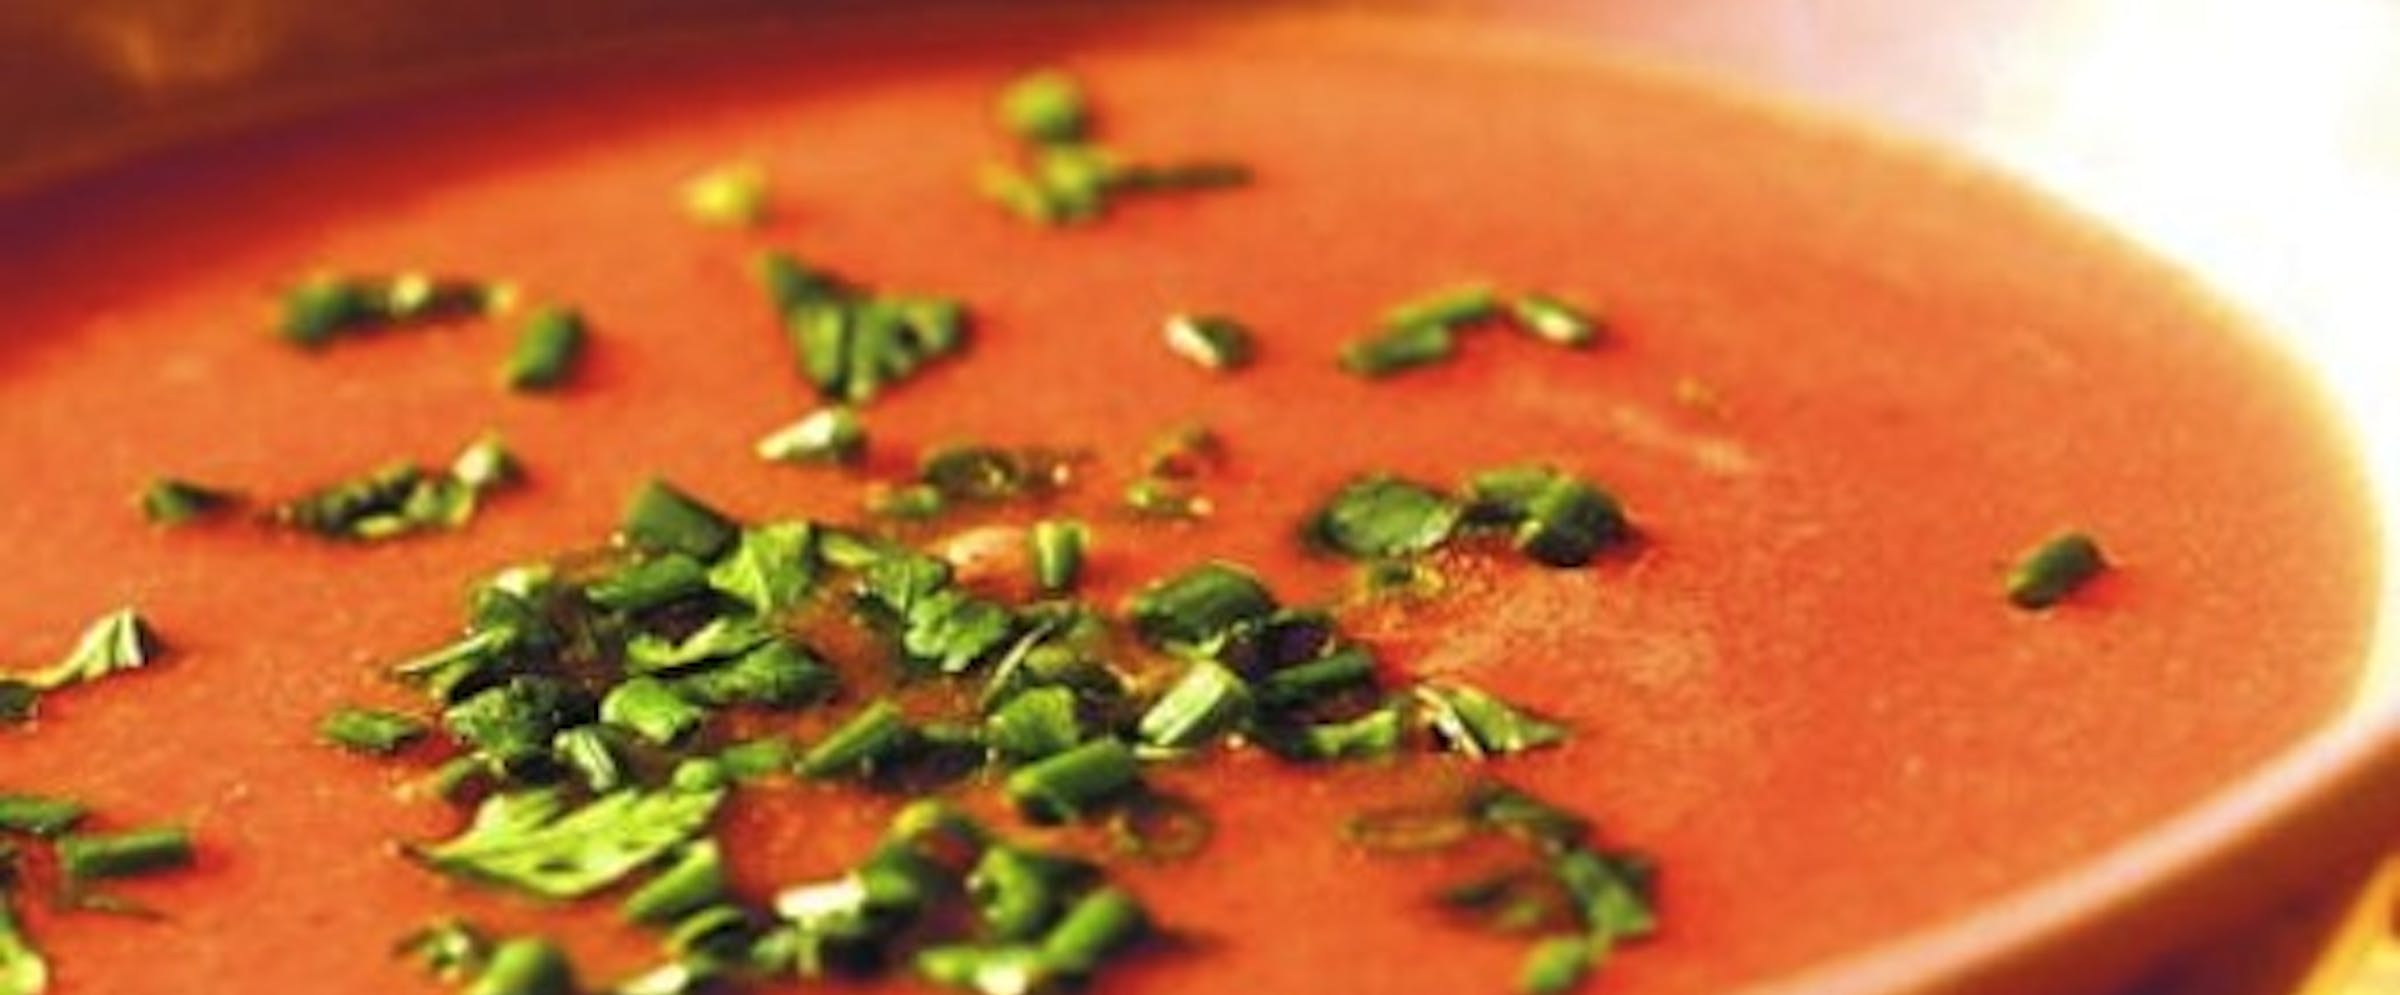 Rød suppe i skål, med grønt strødd oppå.